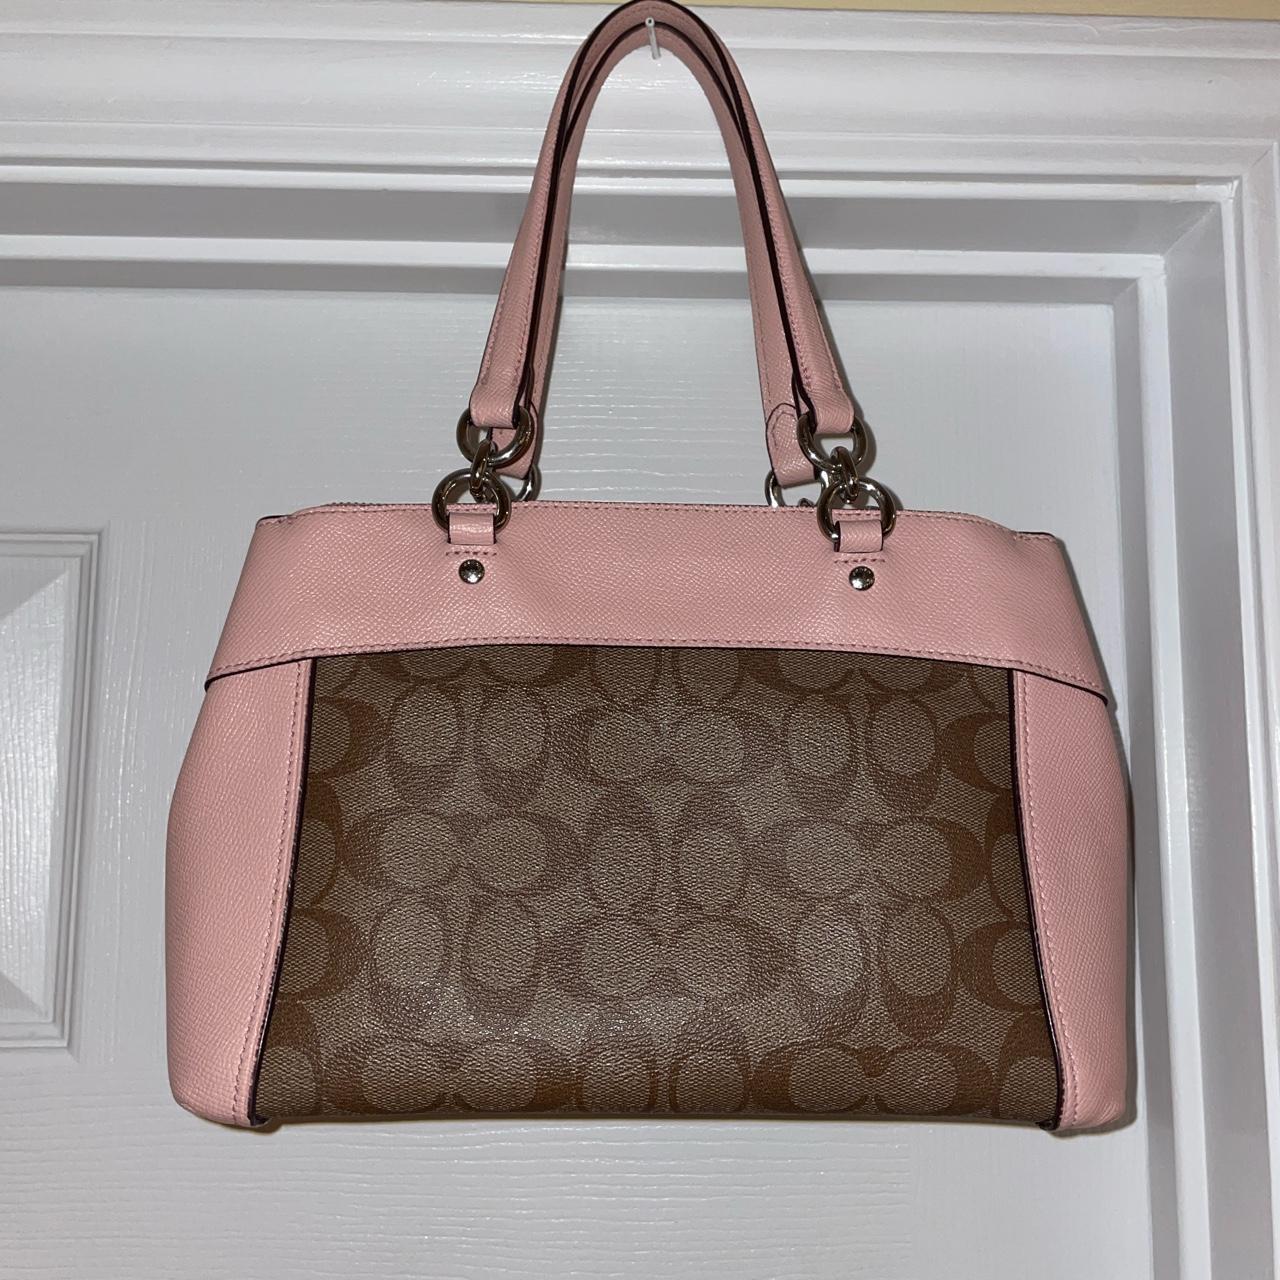 Dark brown coach handbag. Bag has pink strap & pink